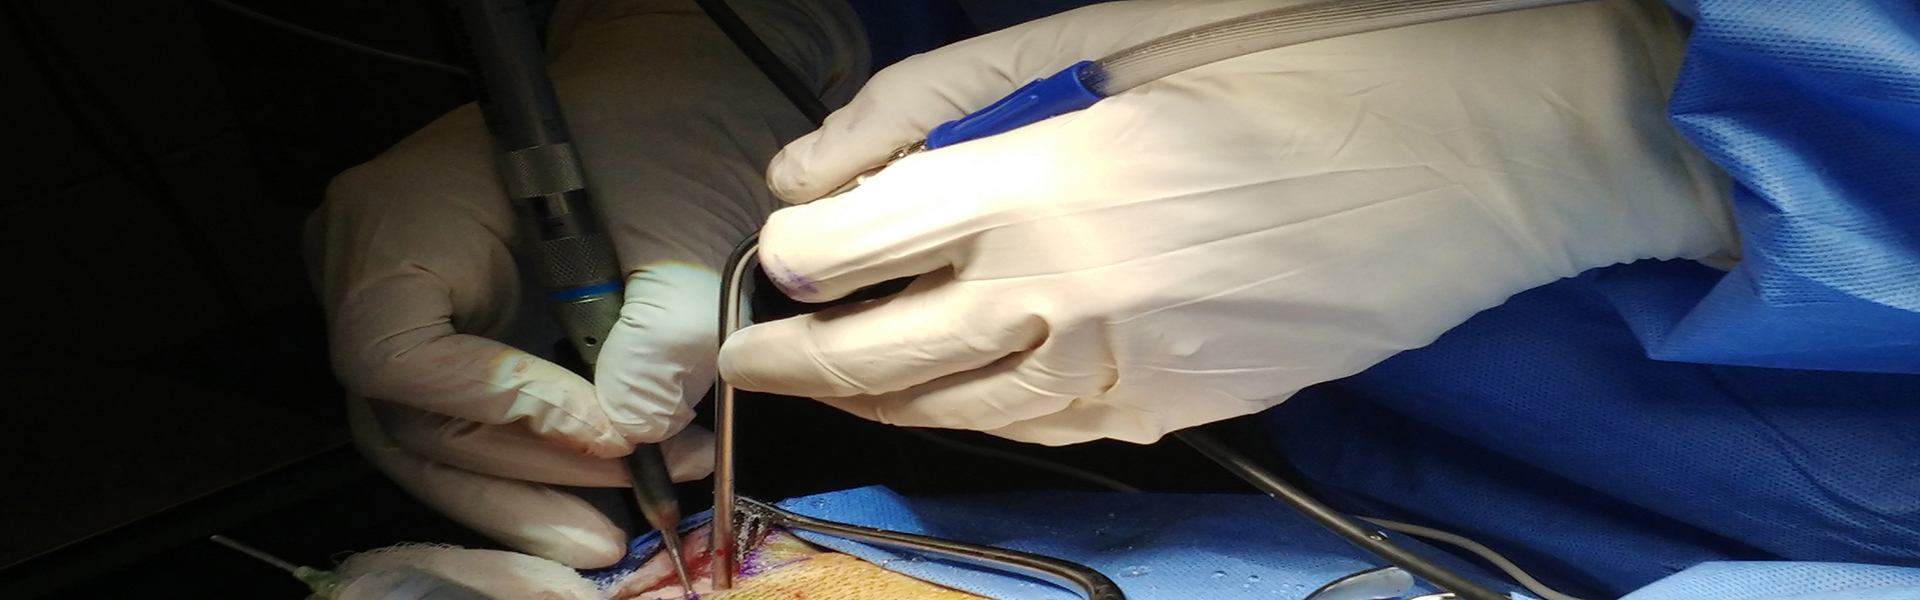 Surgeons hands suction